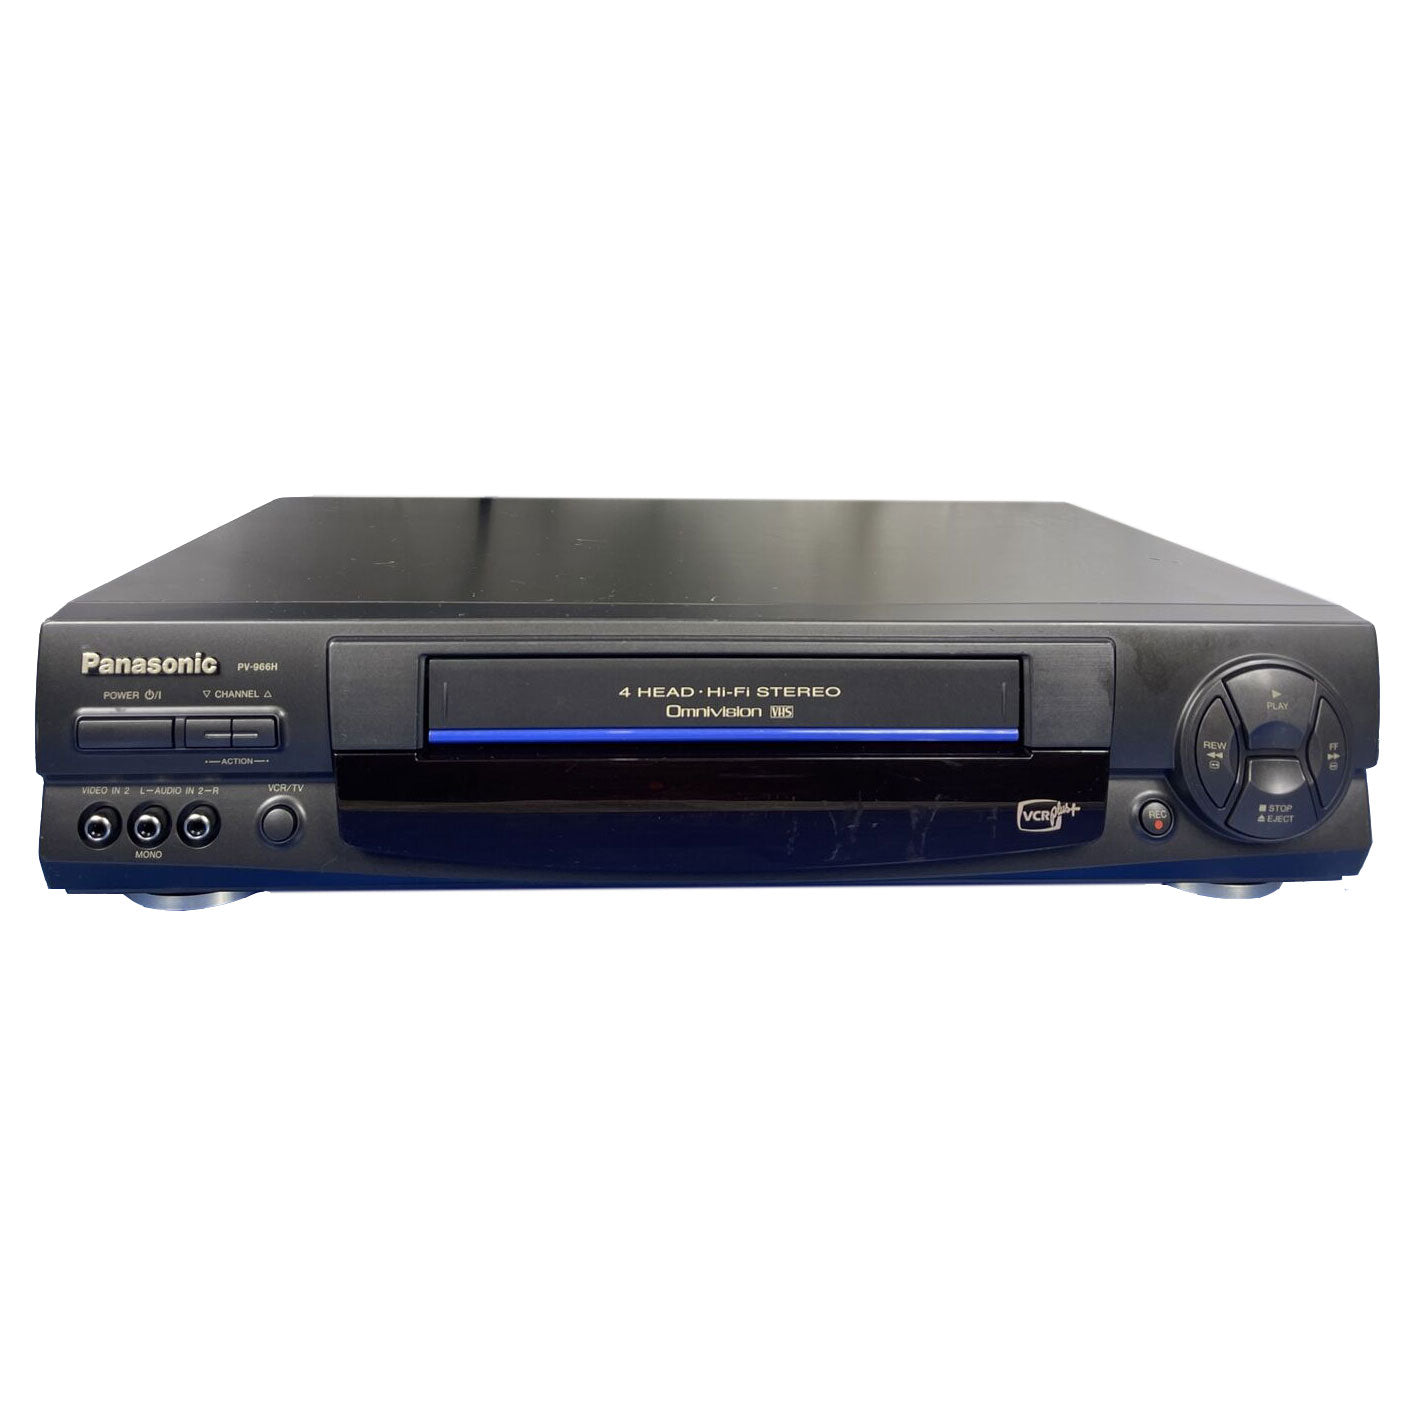 Panasonic PV-966H Omnivision VCR, 4-Head Hi-Fi Stereo